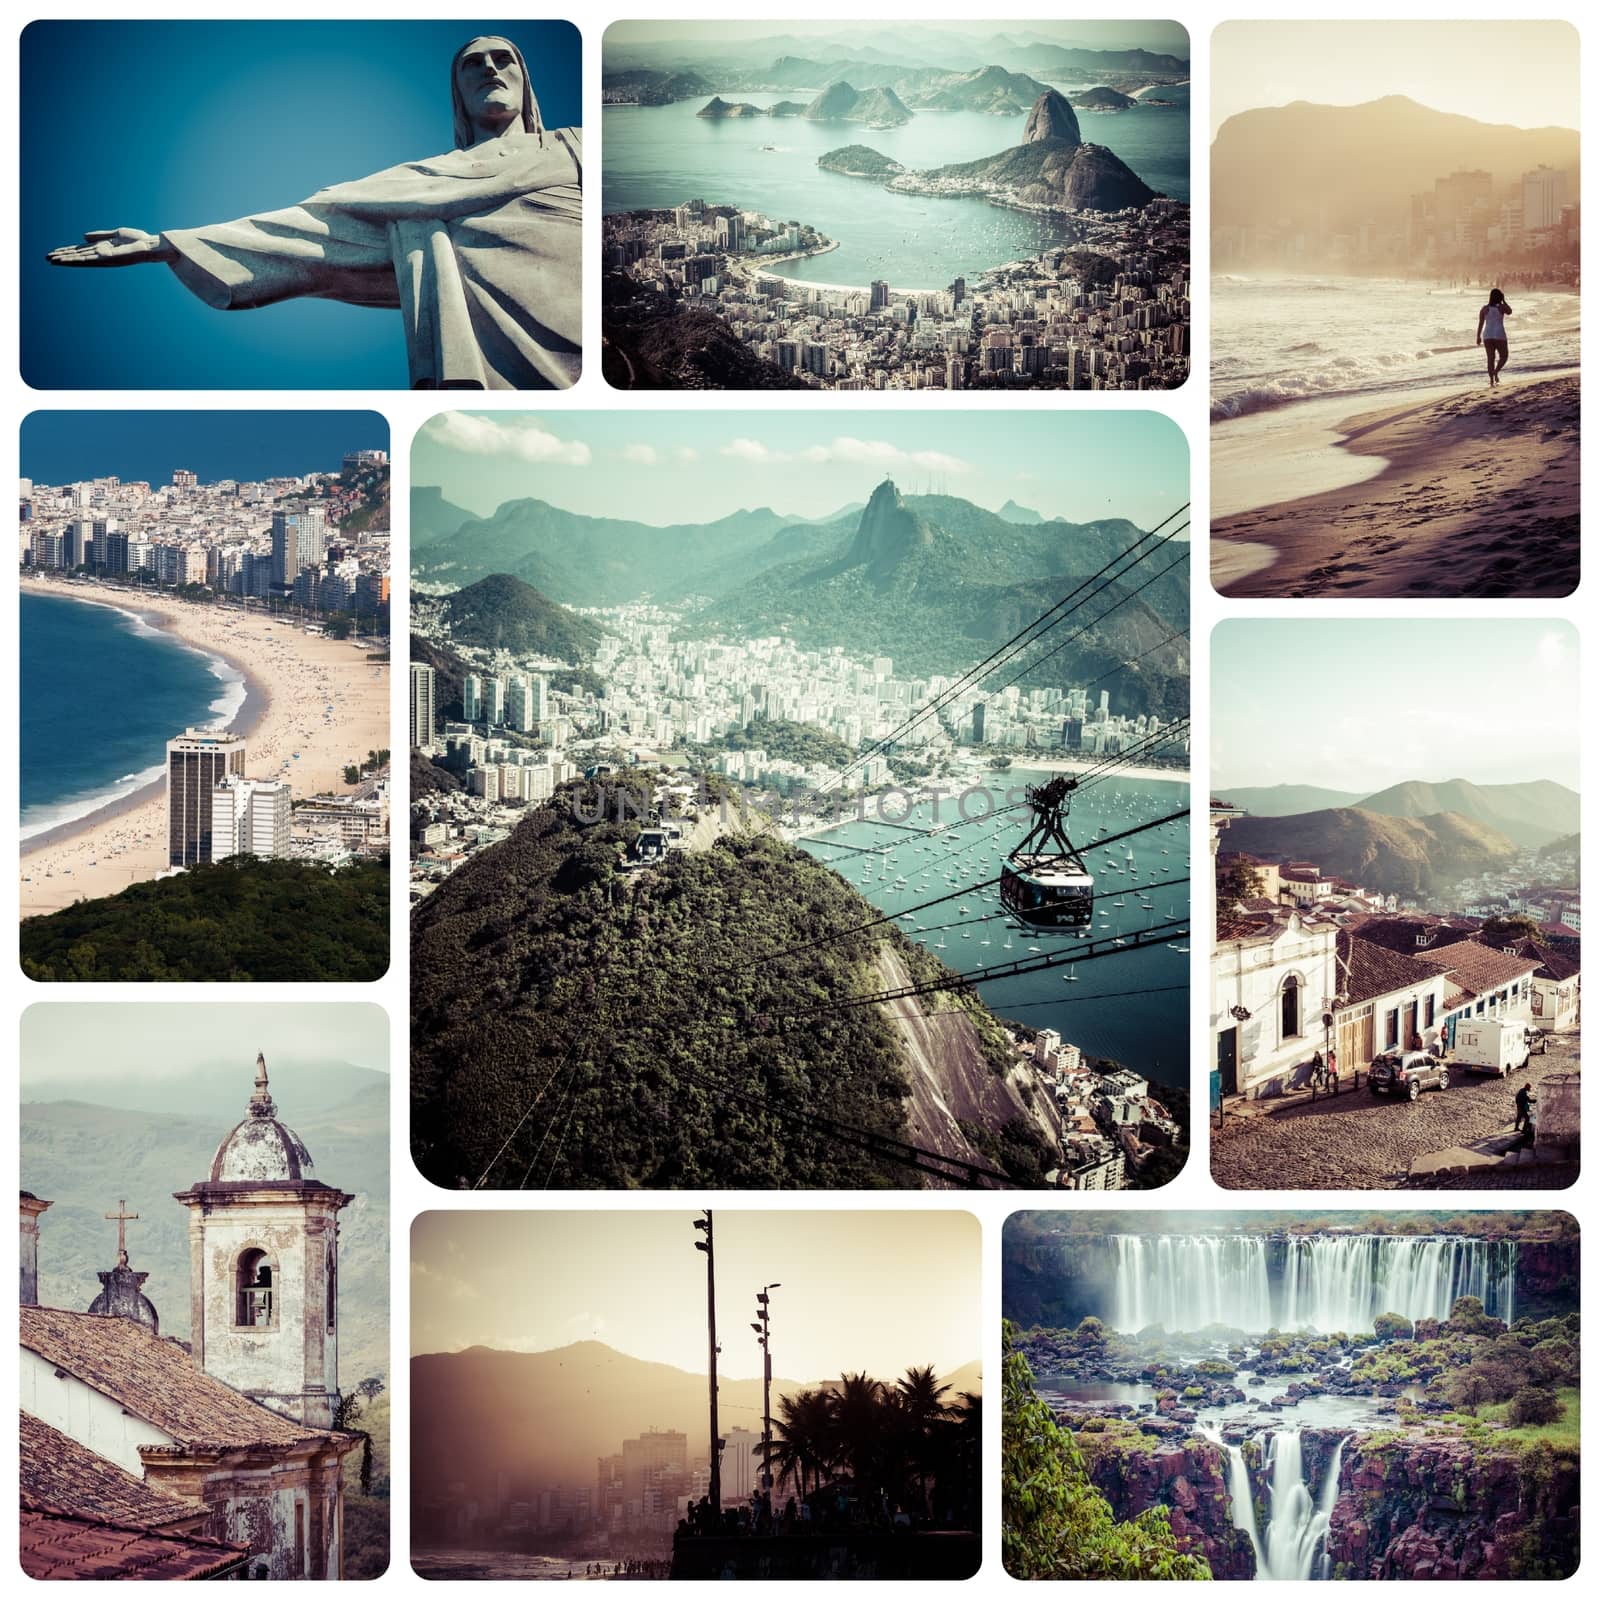 Collage of Rio de Janeiro (Brazil) images - travel background (my photos)